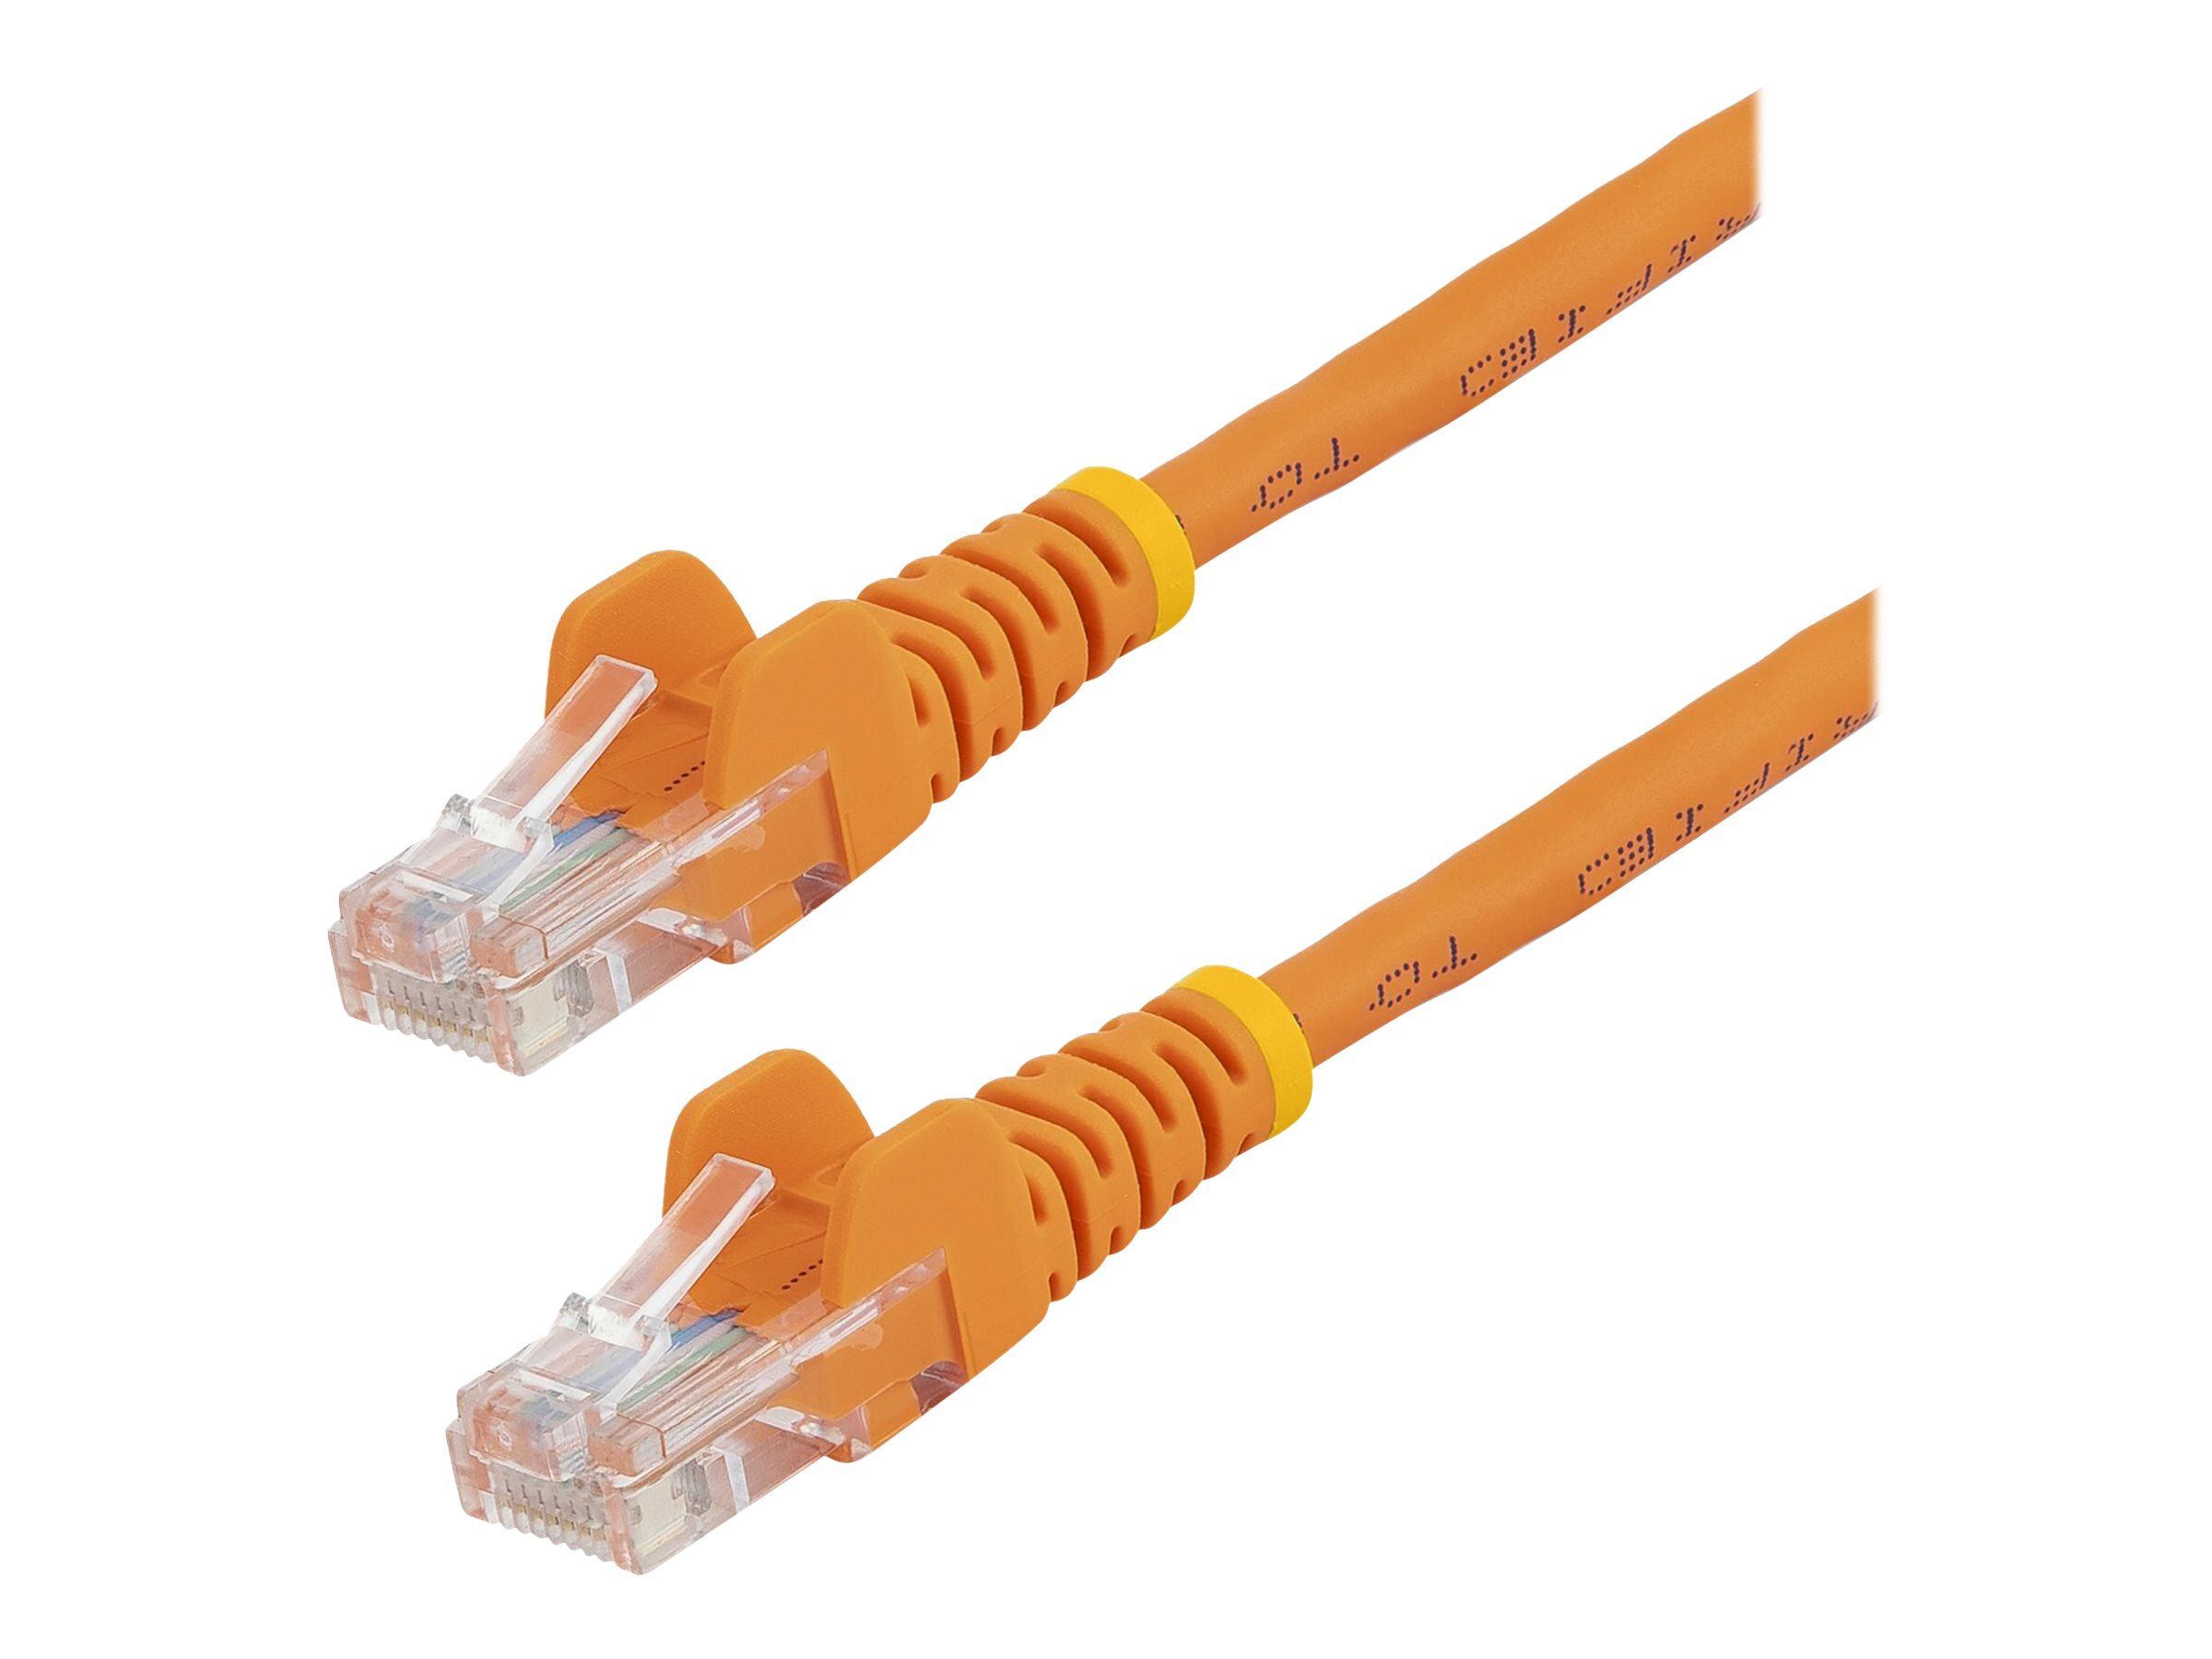 StarTech.com CAT5e Cable - 10 m Orange Ethernet Cable - Snagless - CAT5e Patch Cord - CAT5e UTP Cable - RJ45 Network Cable